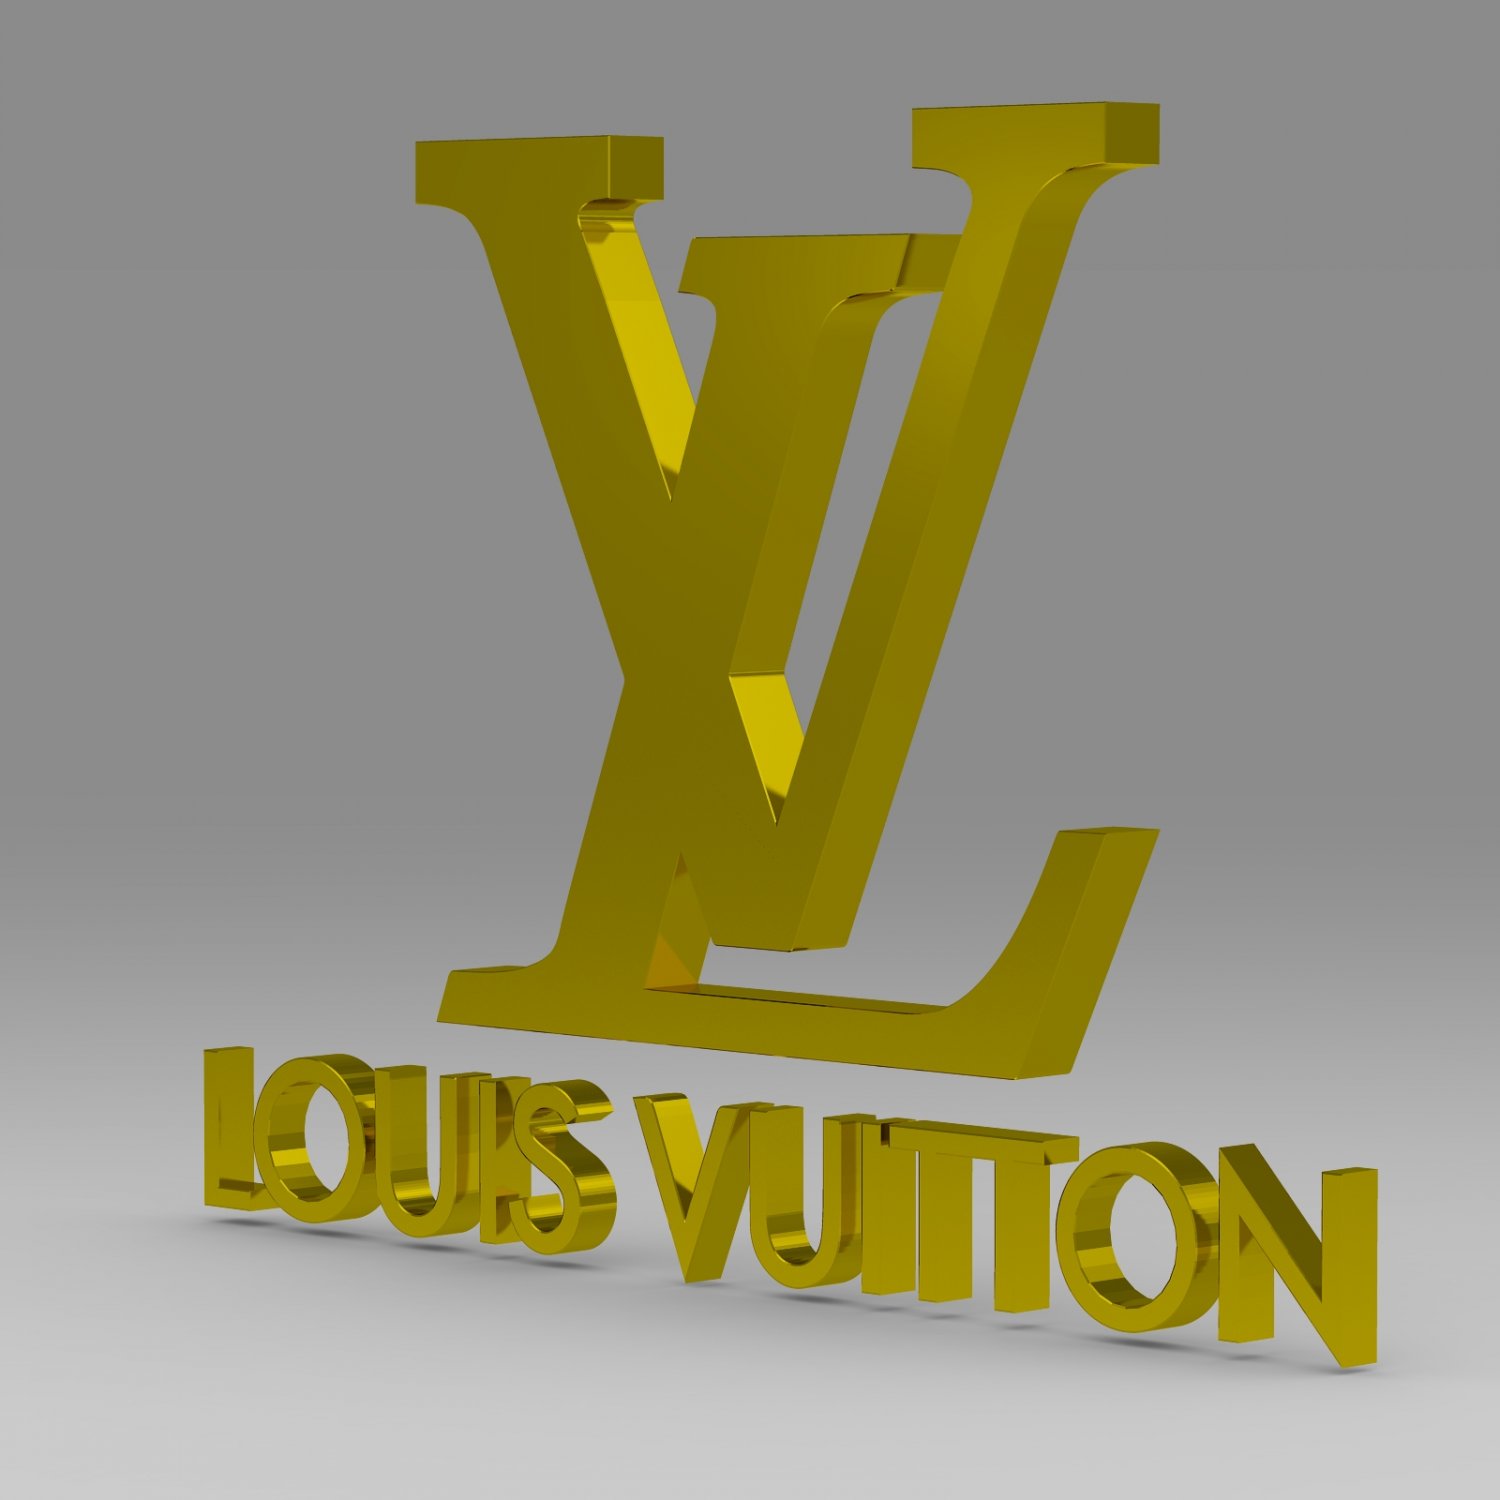 Louis Vuitton Logo 002 free VR / AR / low-poly 3D model